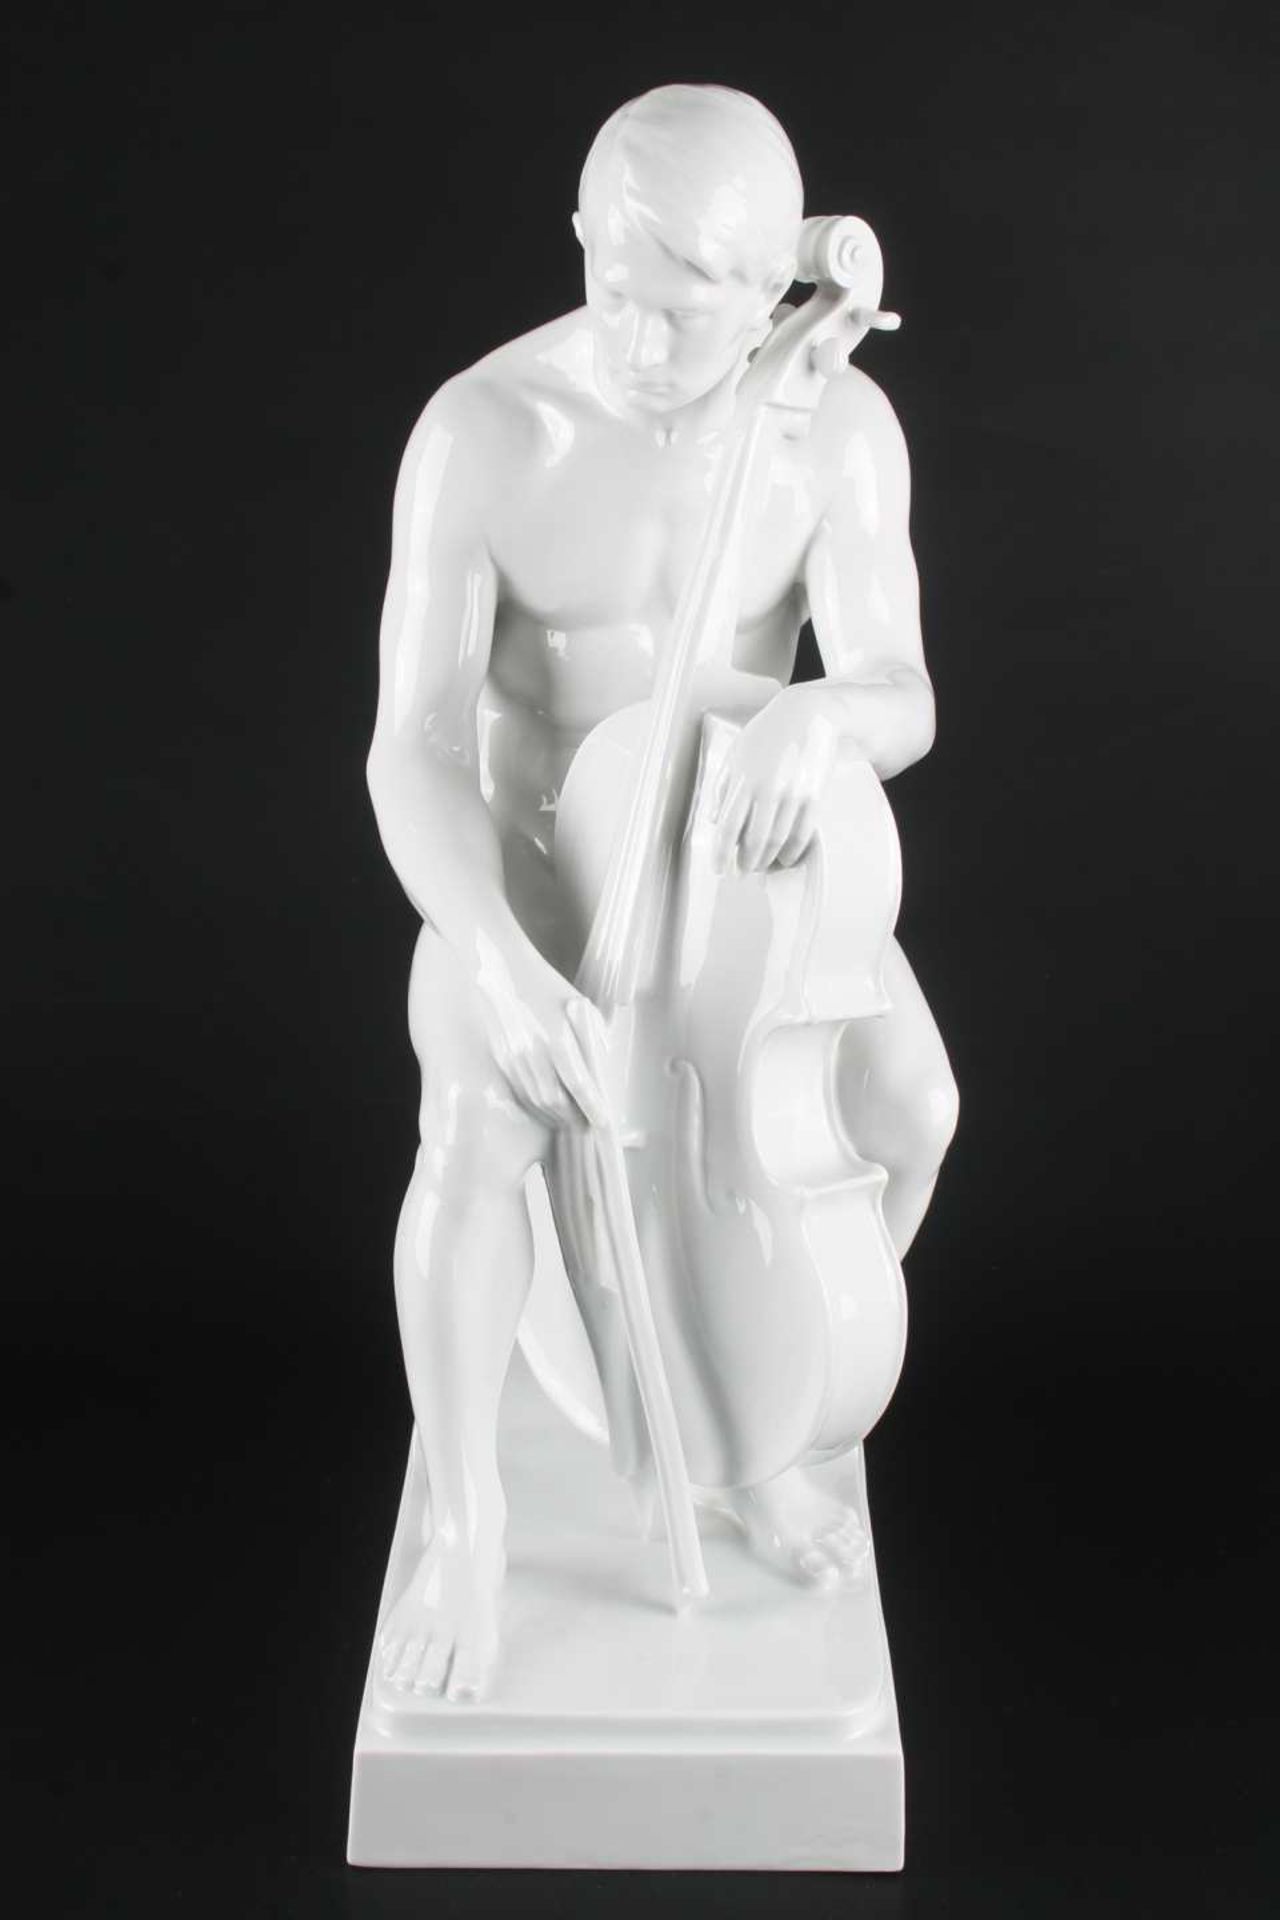 Rosenthal große Porzellanfigur Träumerei von Karl Himmelstoss, porcelain sculpture dreamery, - Image 2 of 9